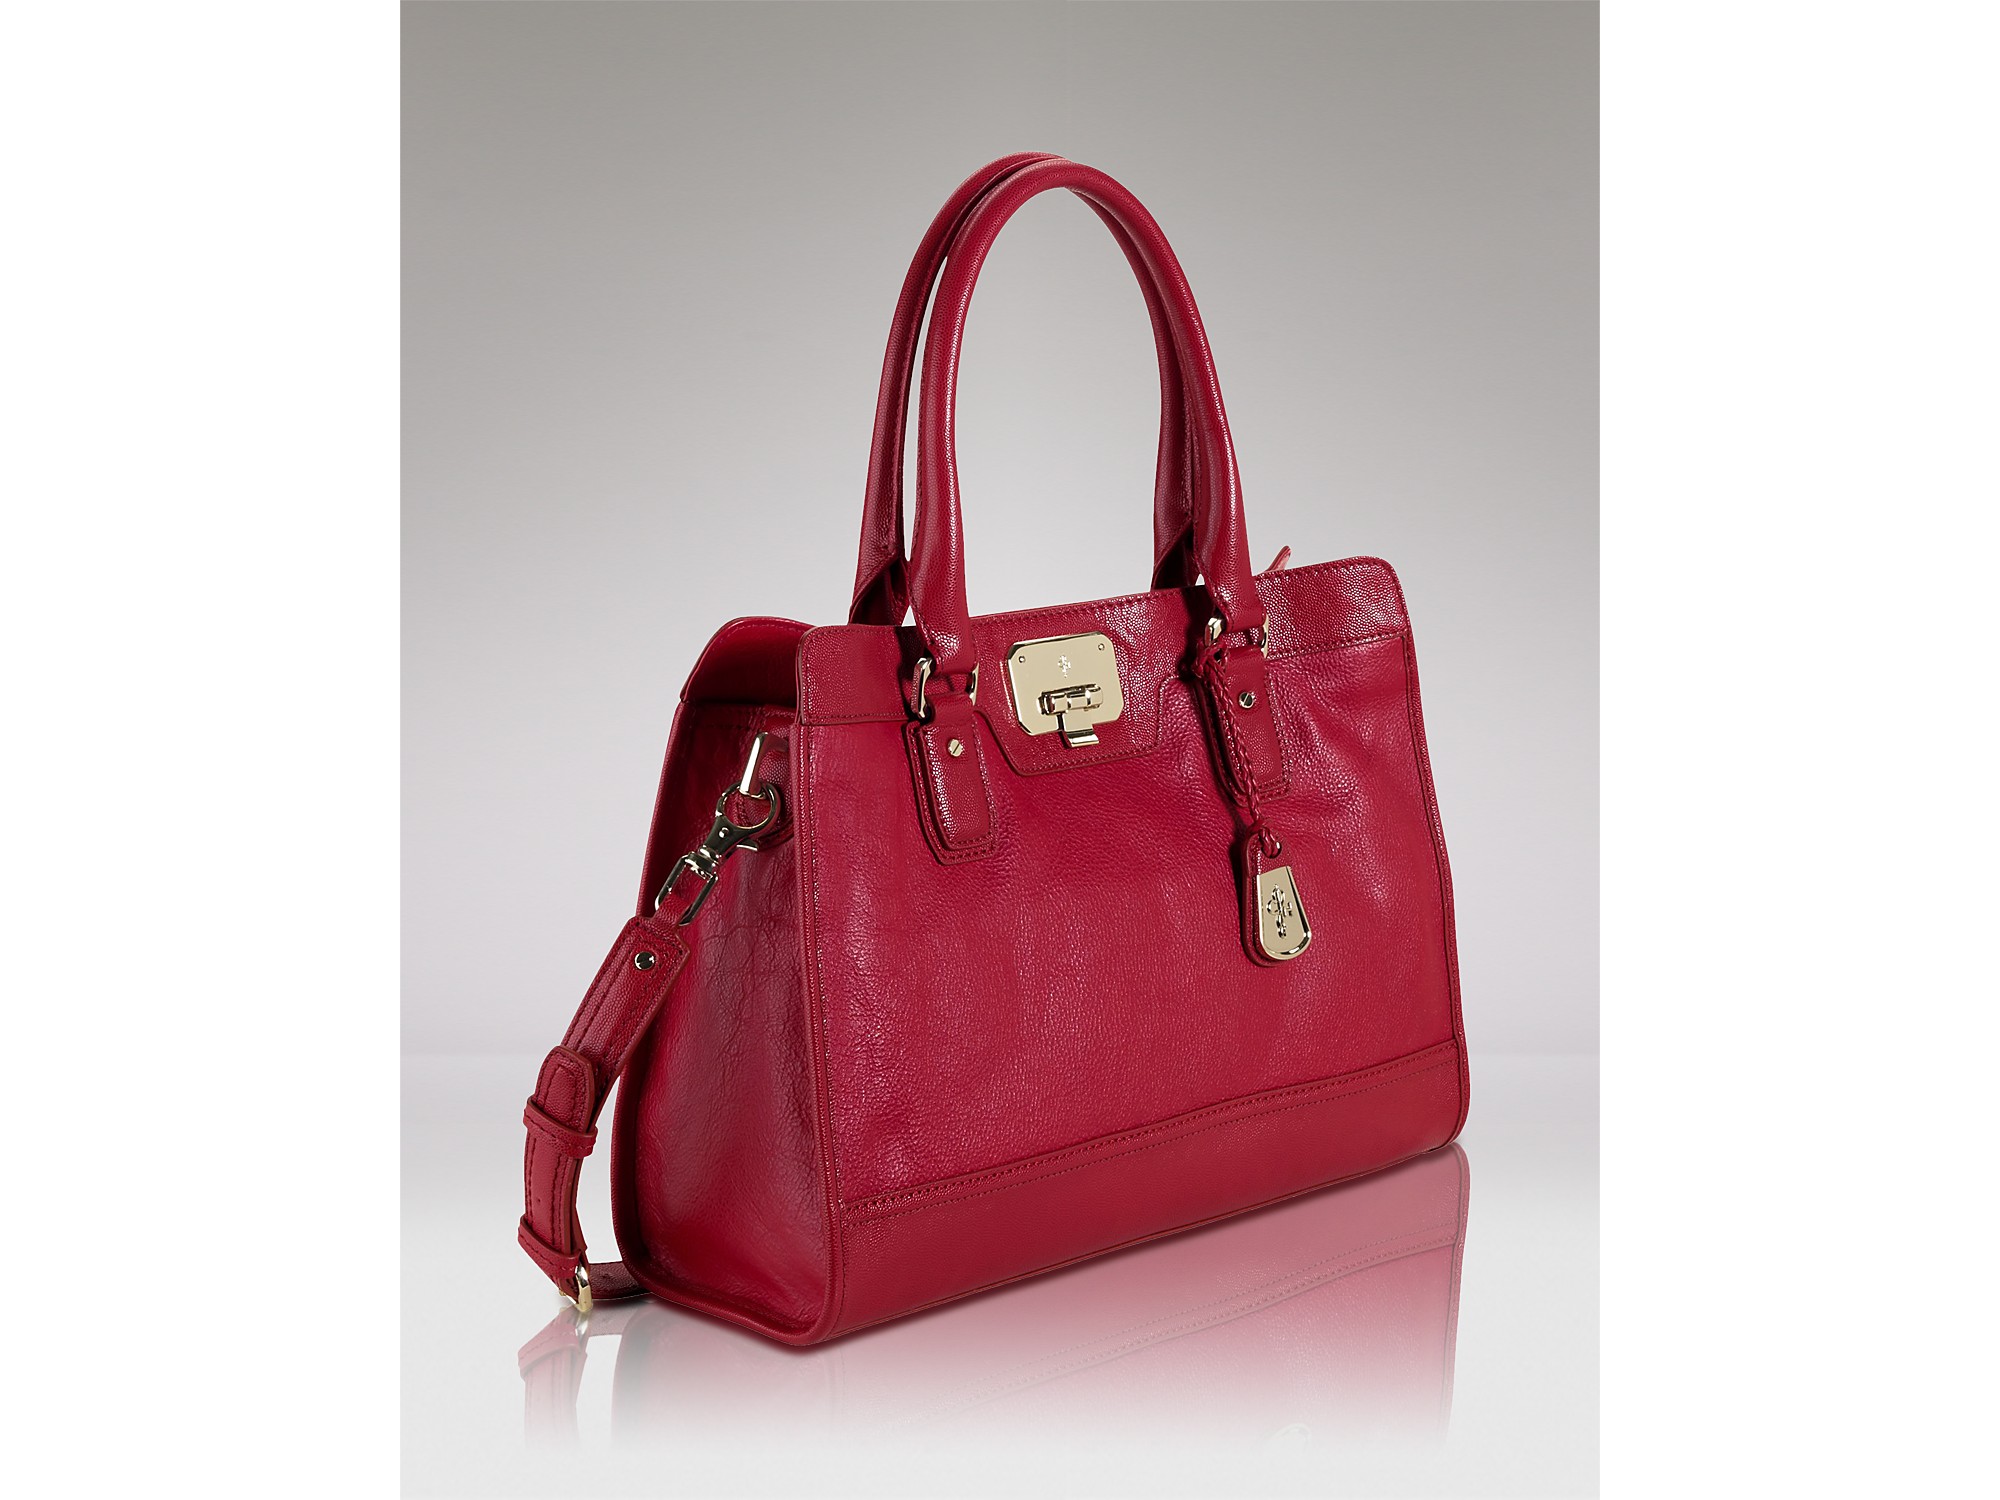 Dior Handbags At Neiman Marcus: Cole Haan Red Handbag